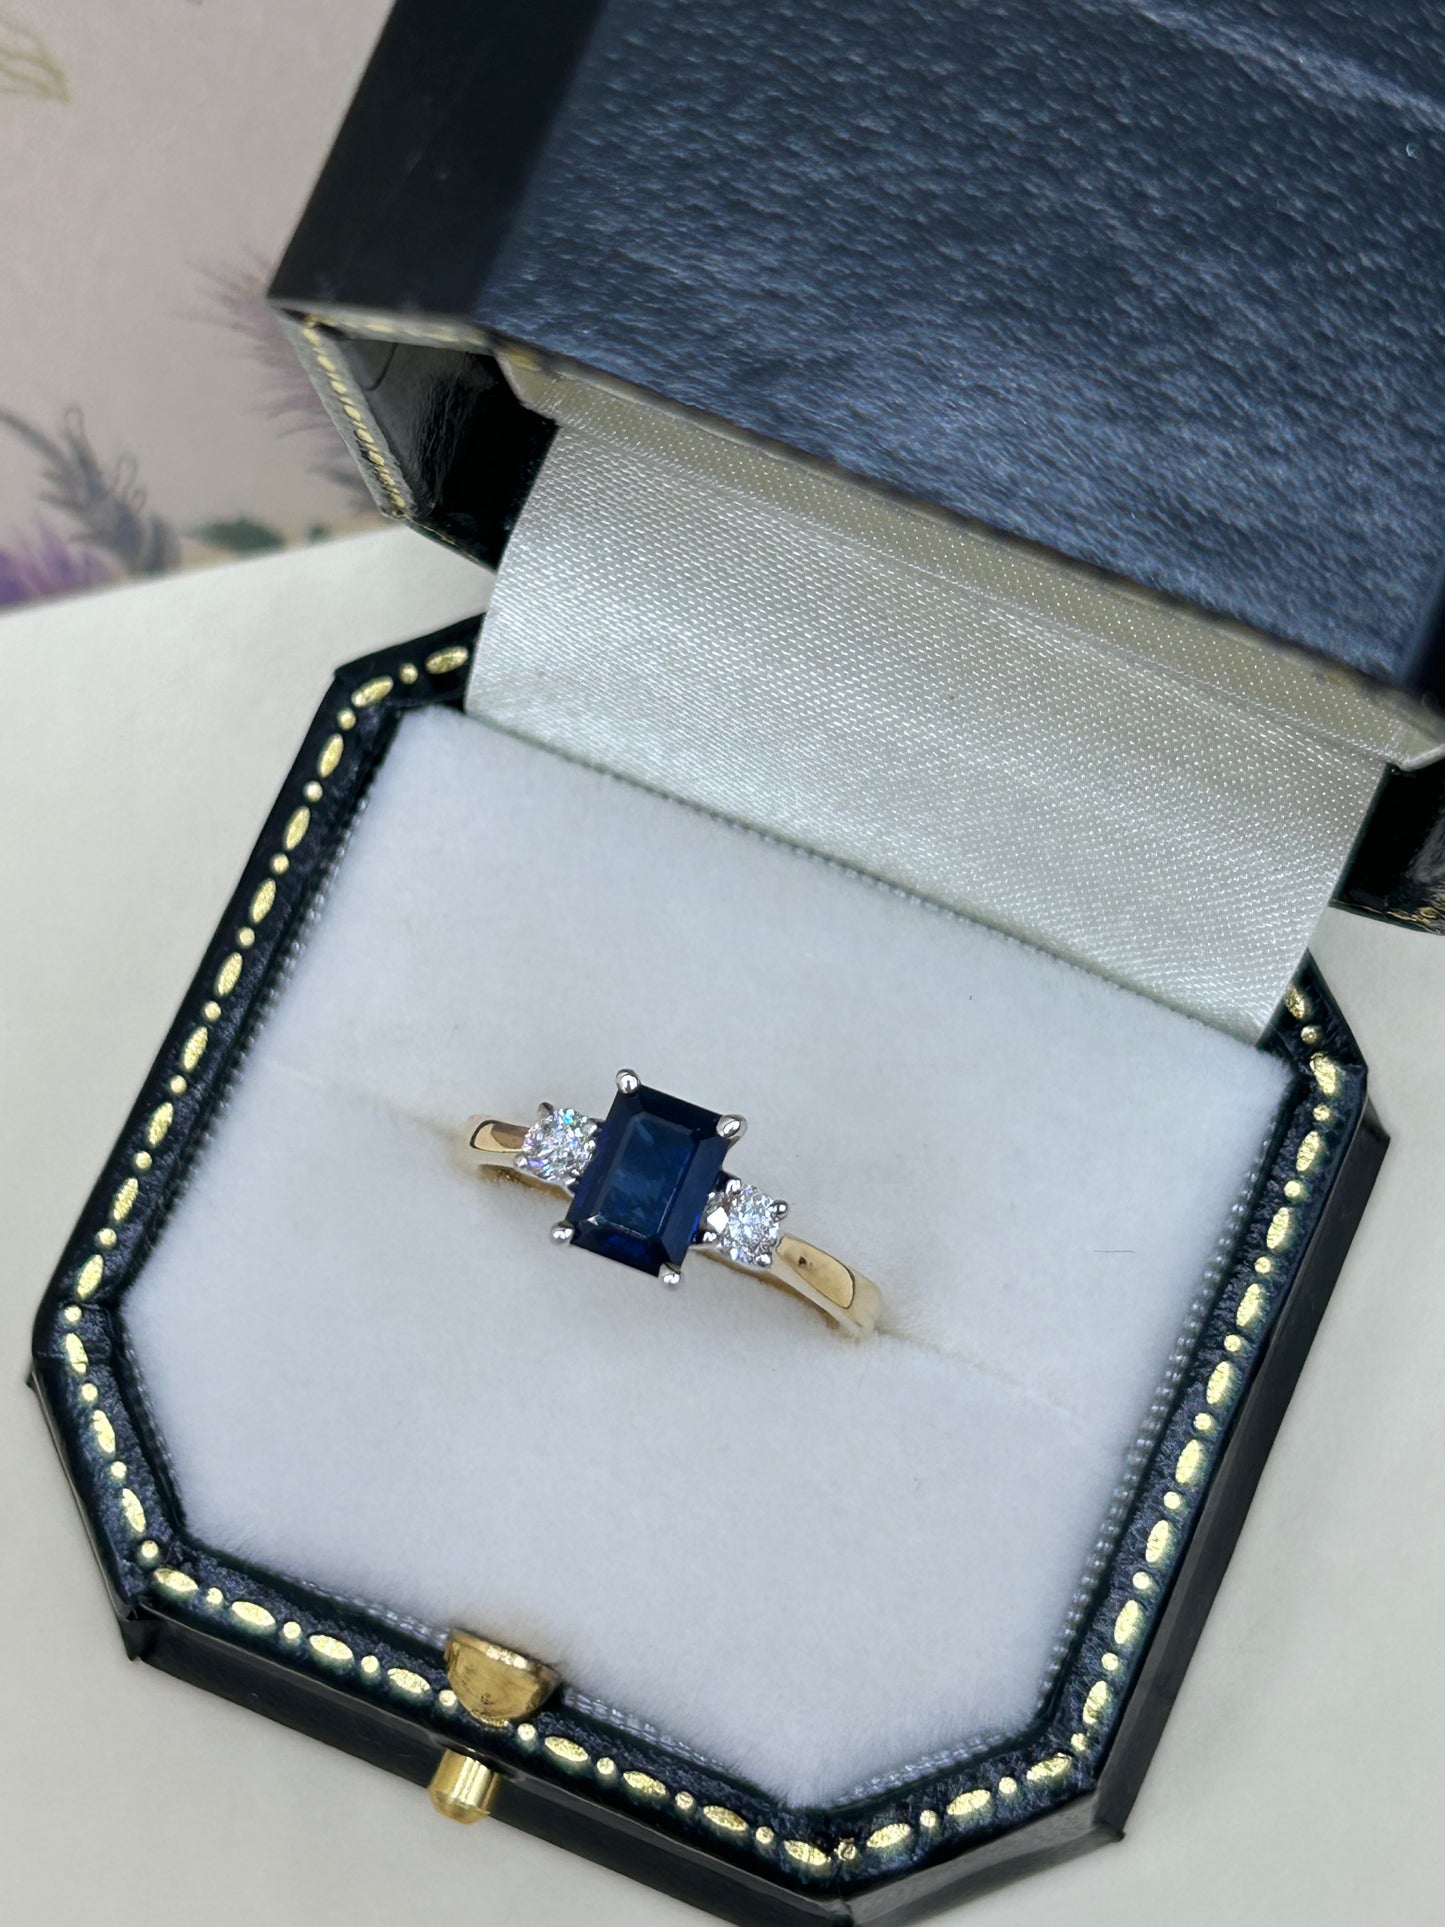 18ct Gold Sapphire and Diamond Three Stone Ring